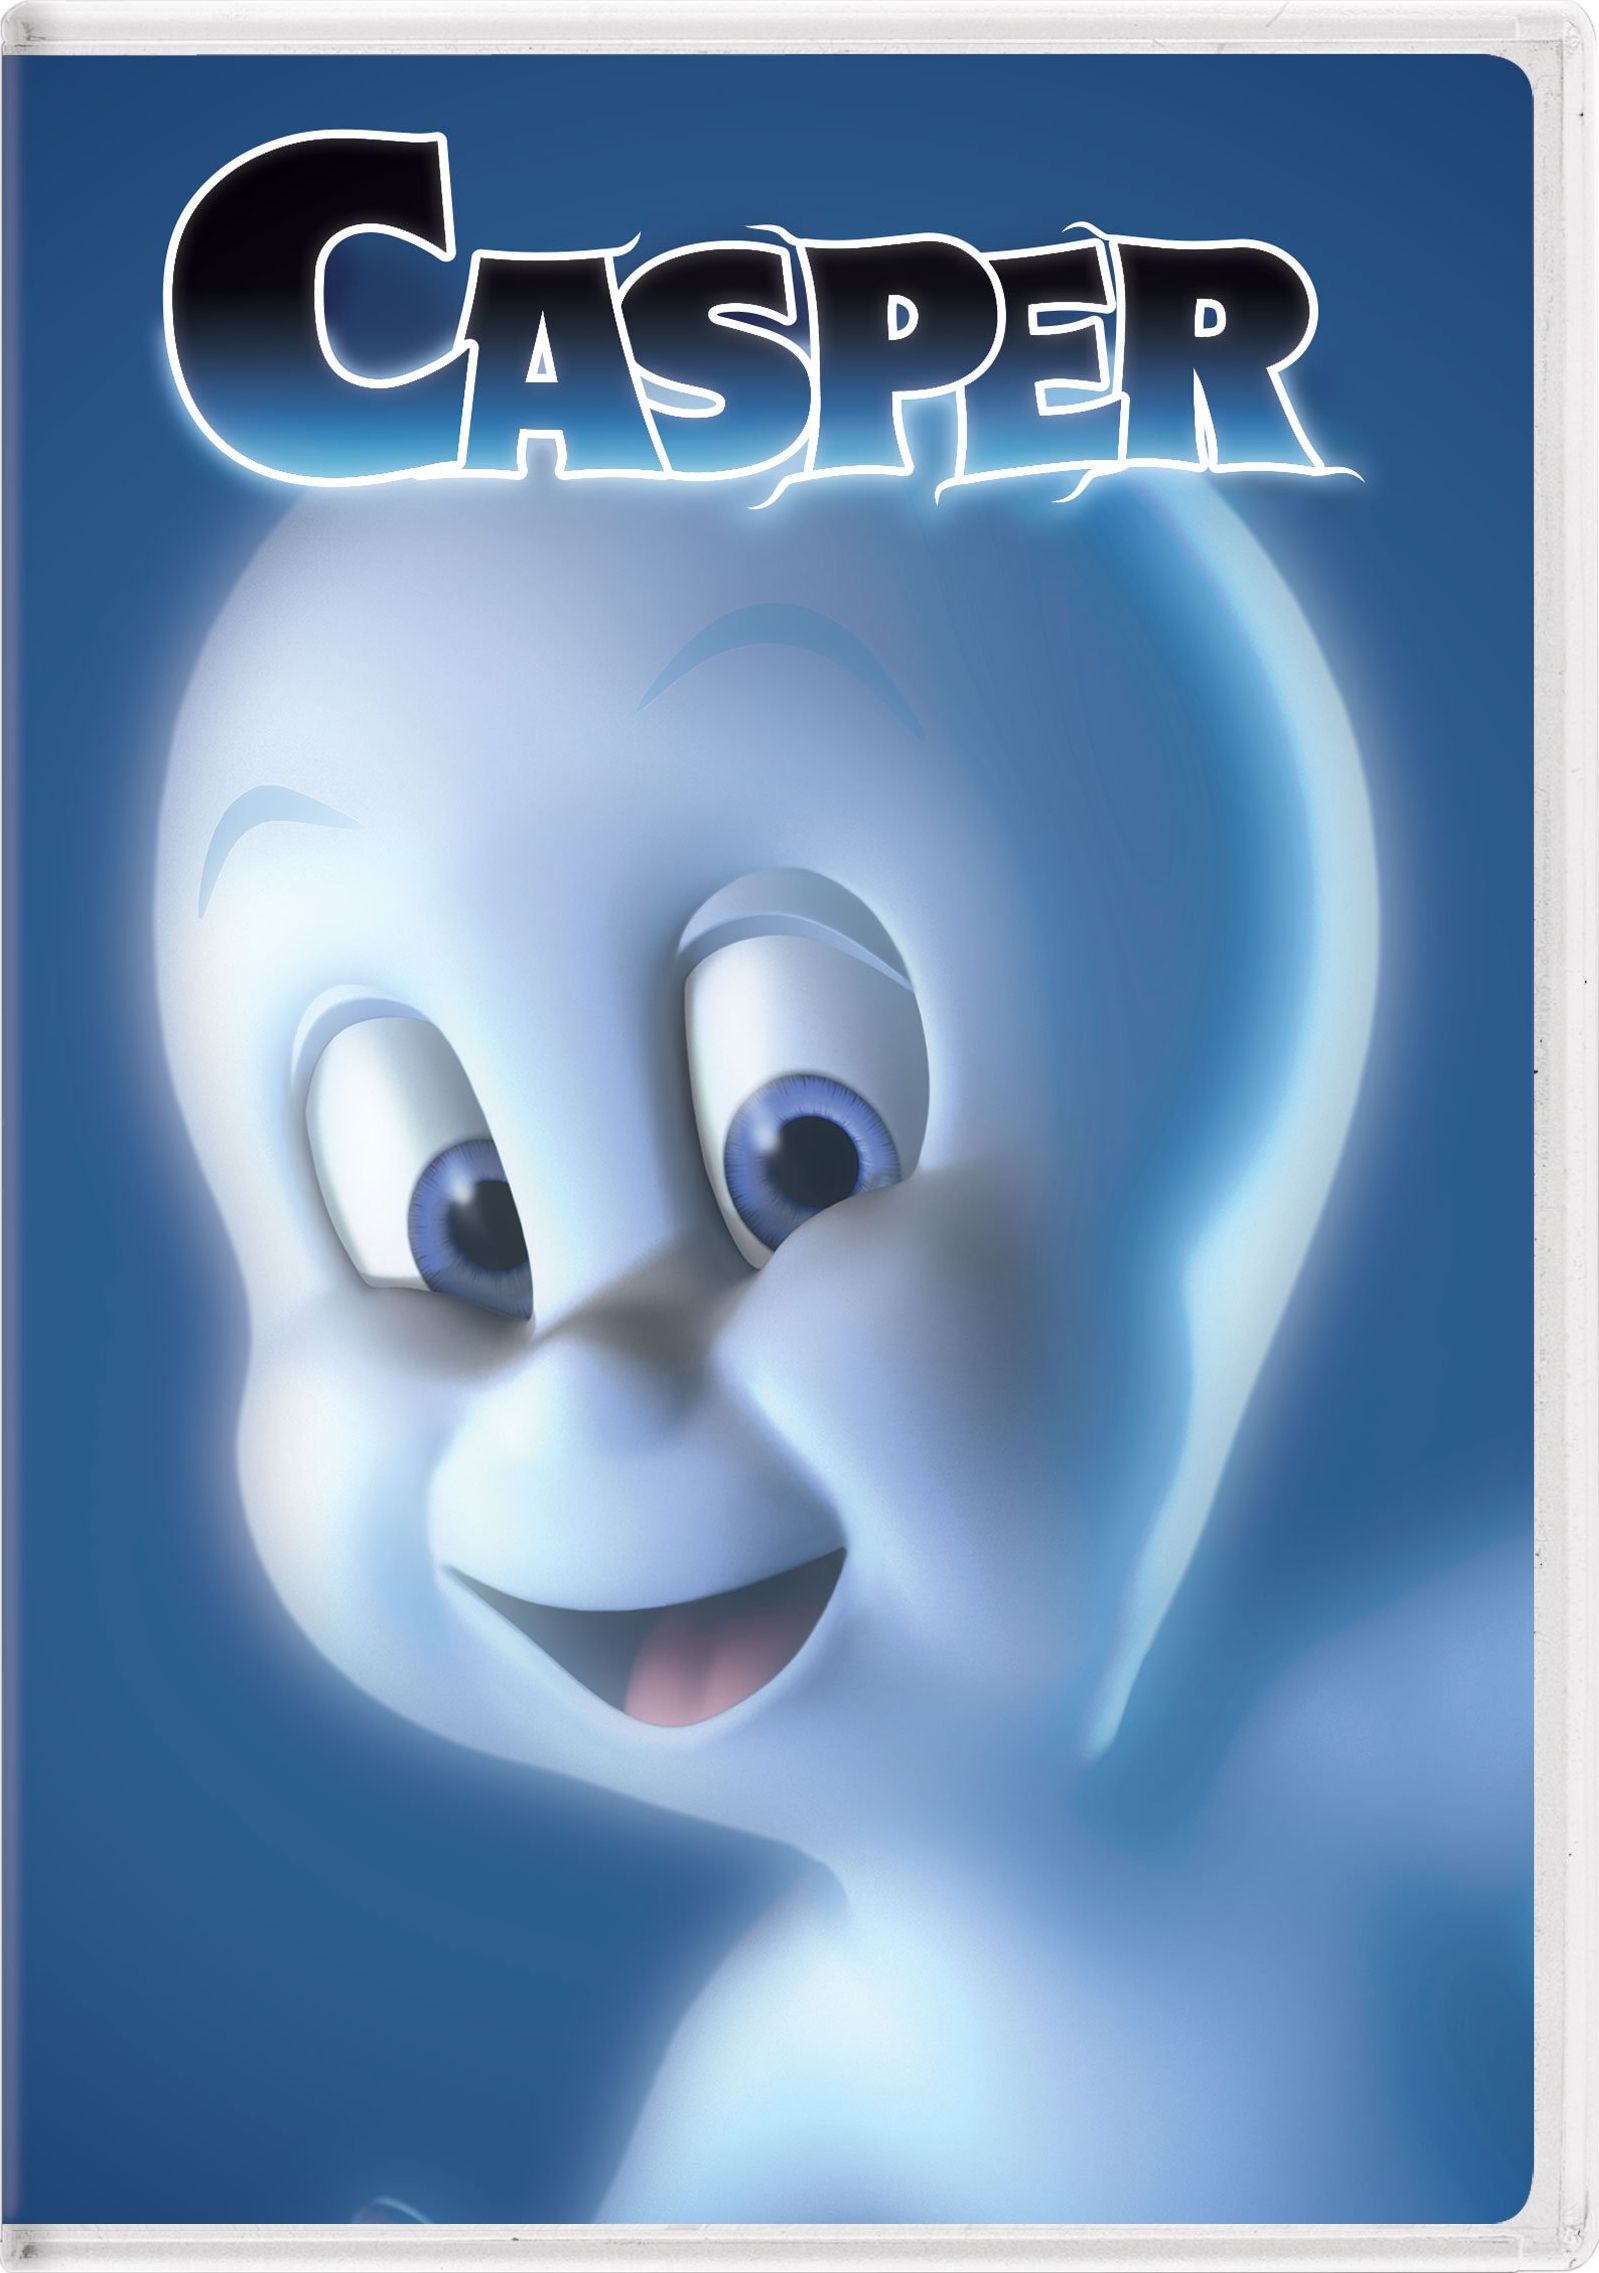 Casper (1995) first appeared in a 1945 cartoon short, The Friendly